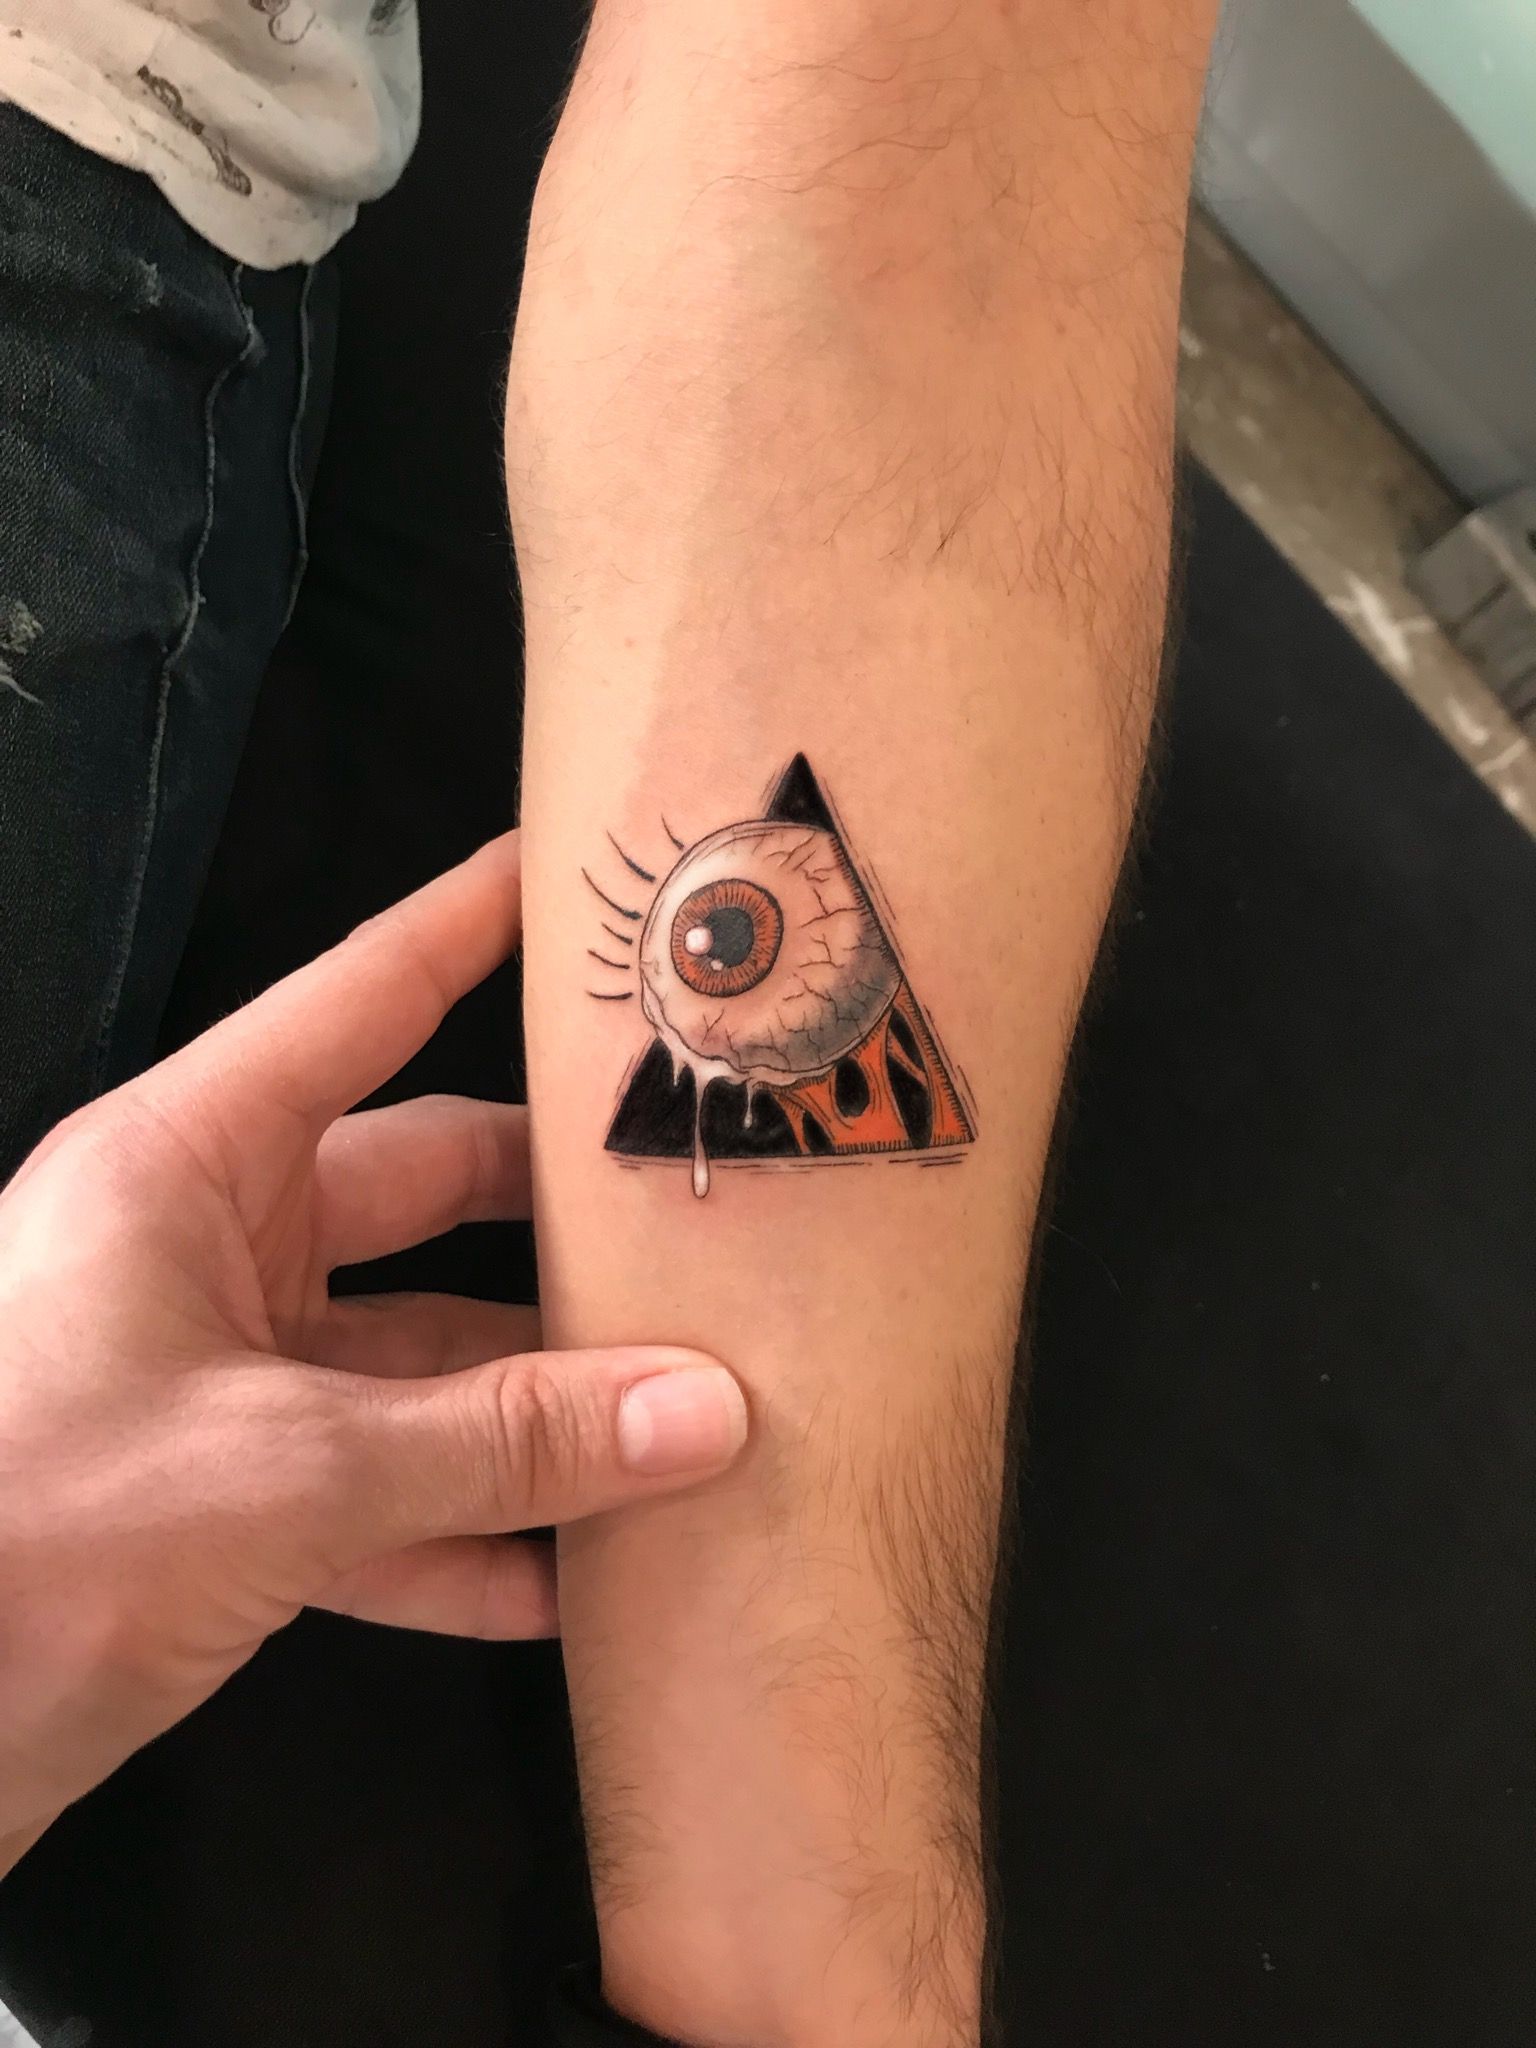 𝐂𝐫𝐚𝐢𝐠 𝐐𝐮𝐢𝐥𝐥 on Instagram Clockwork Orange tattoo Thanks Brad